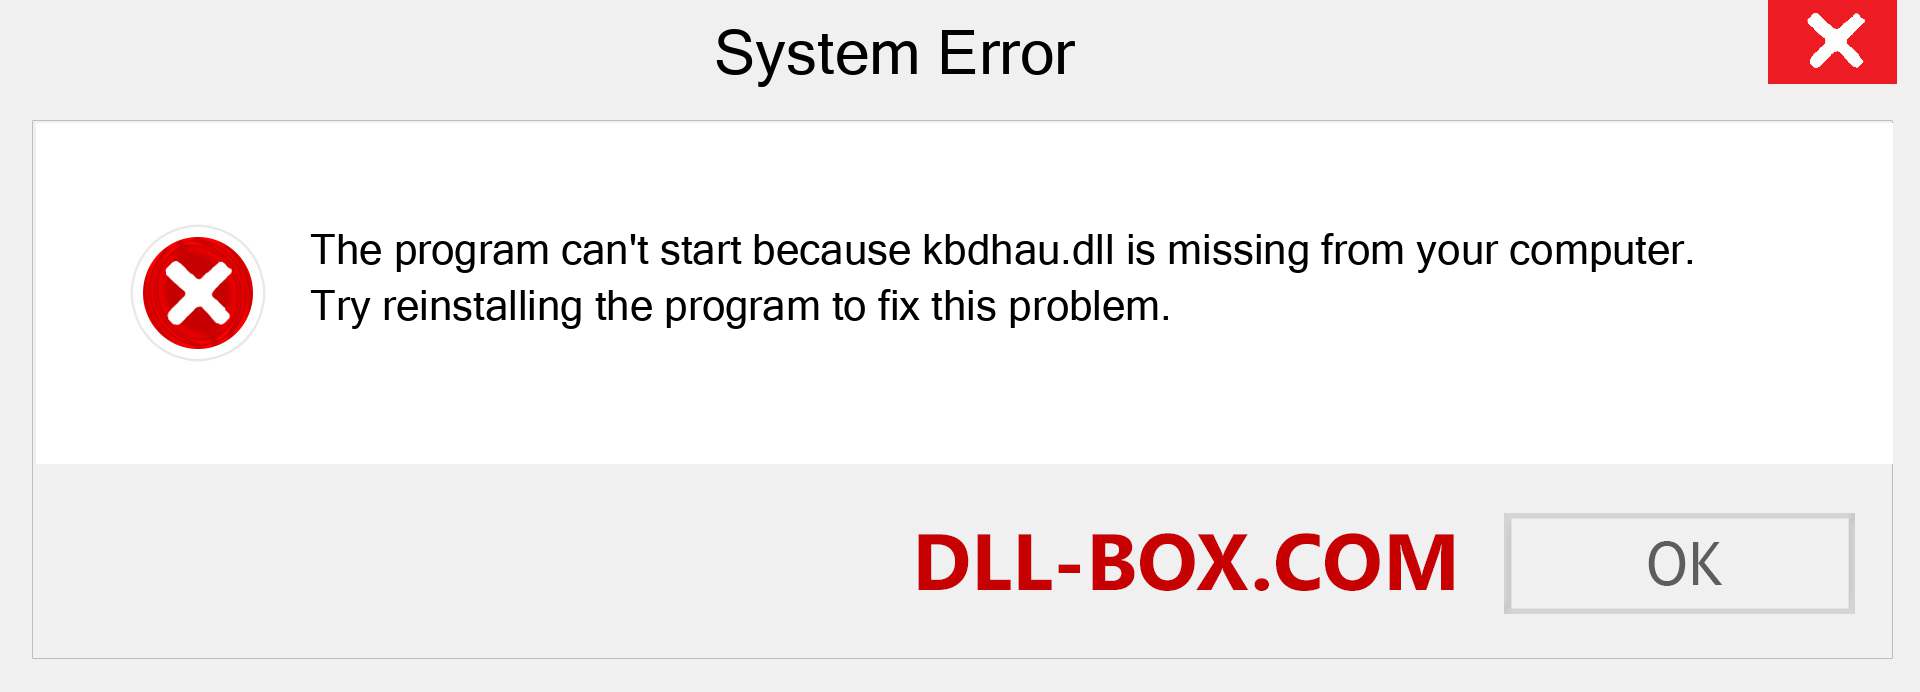  kbdhau.dll file is missing?. Download for Windows 7, 8, 10 - Fix  kbdhau dll Missing Error on Windows, photos, images